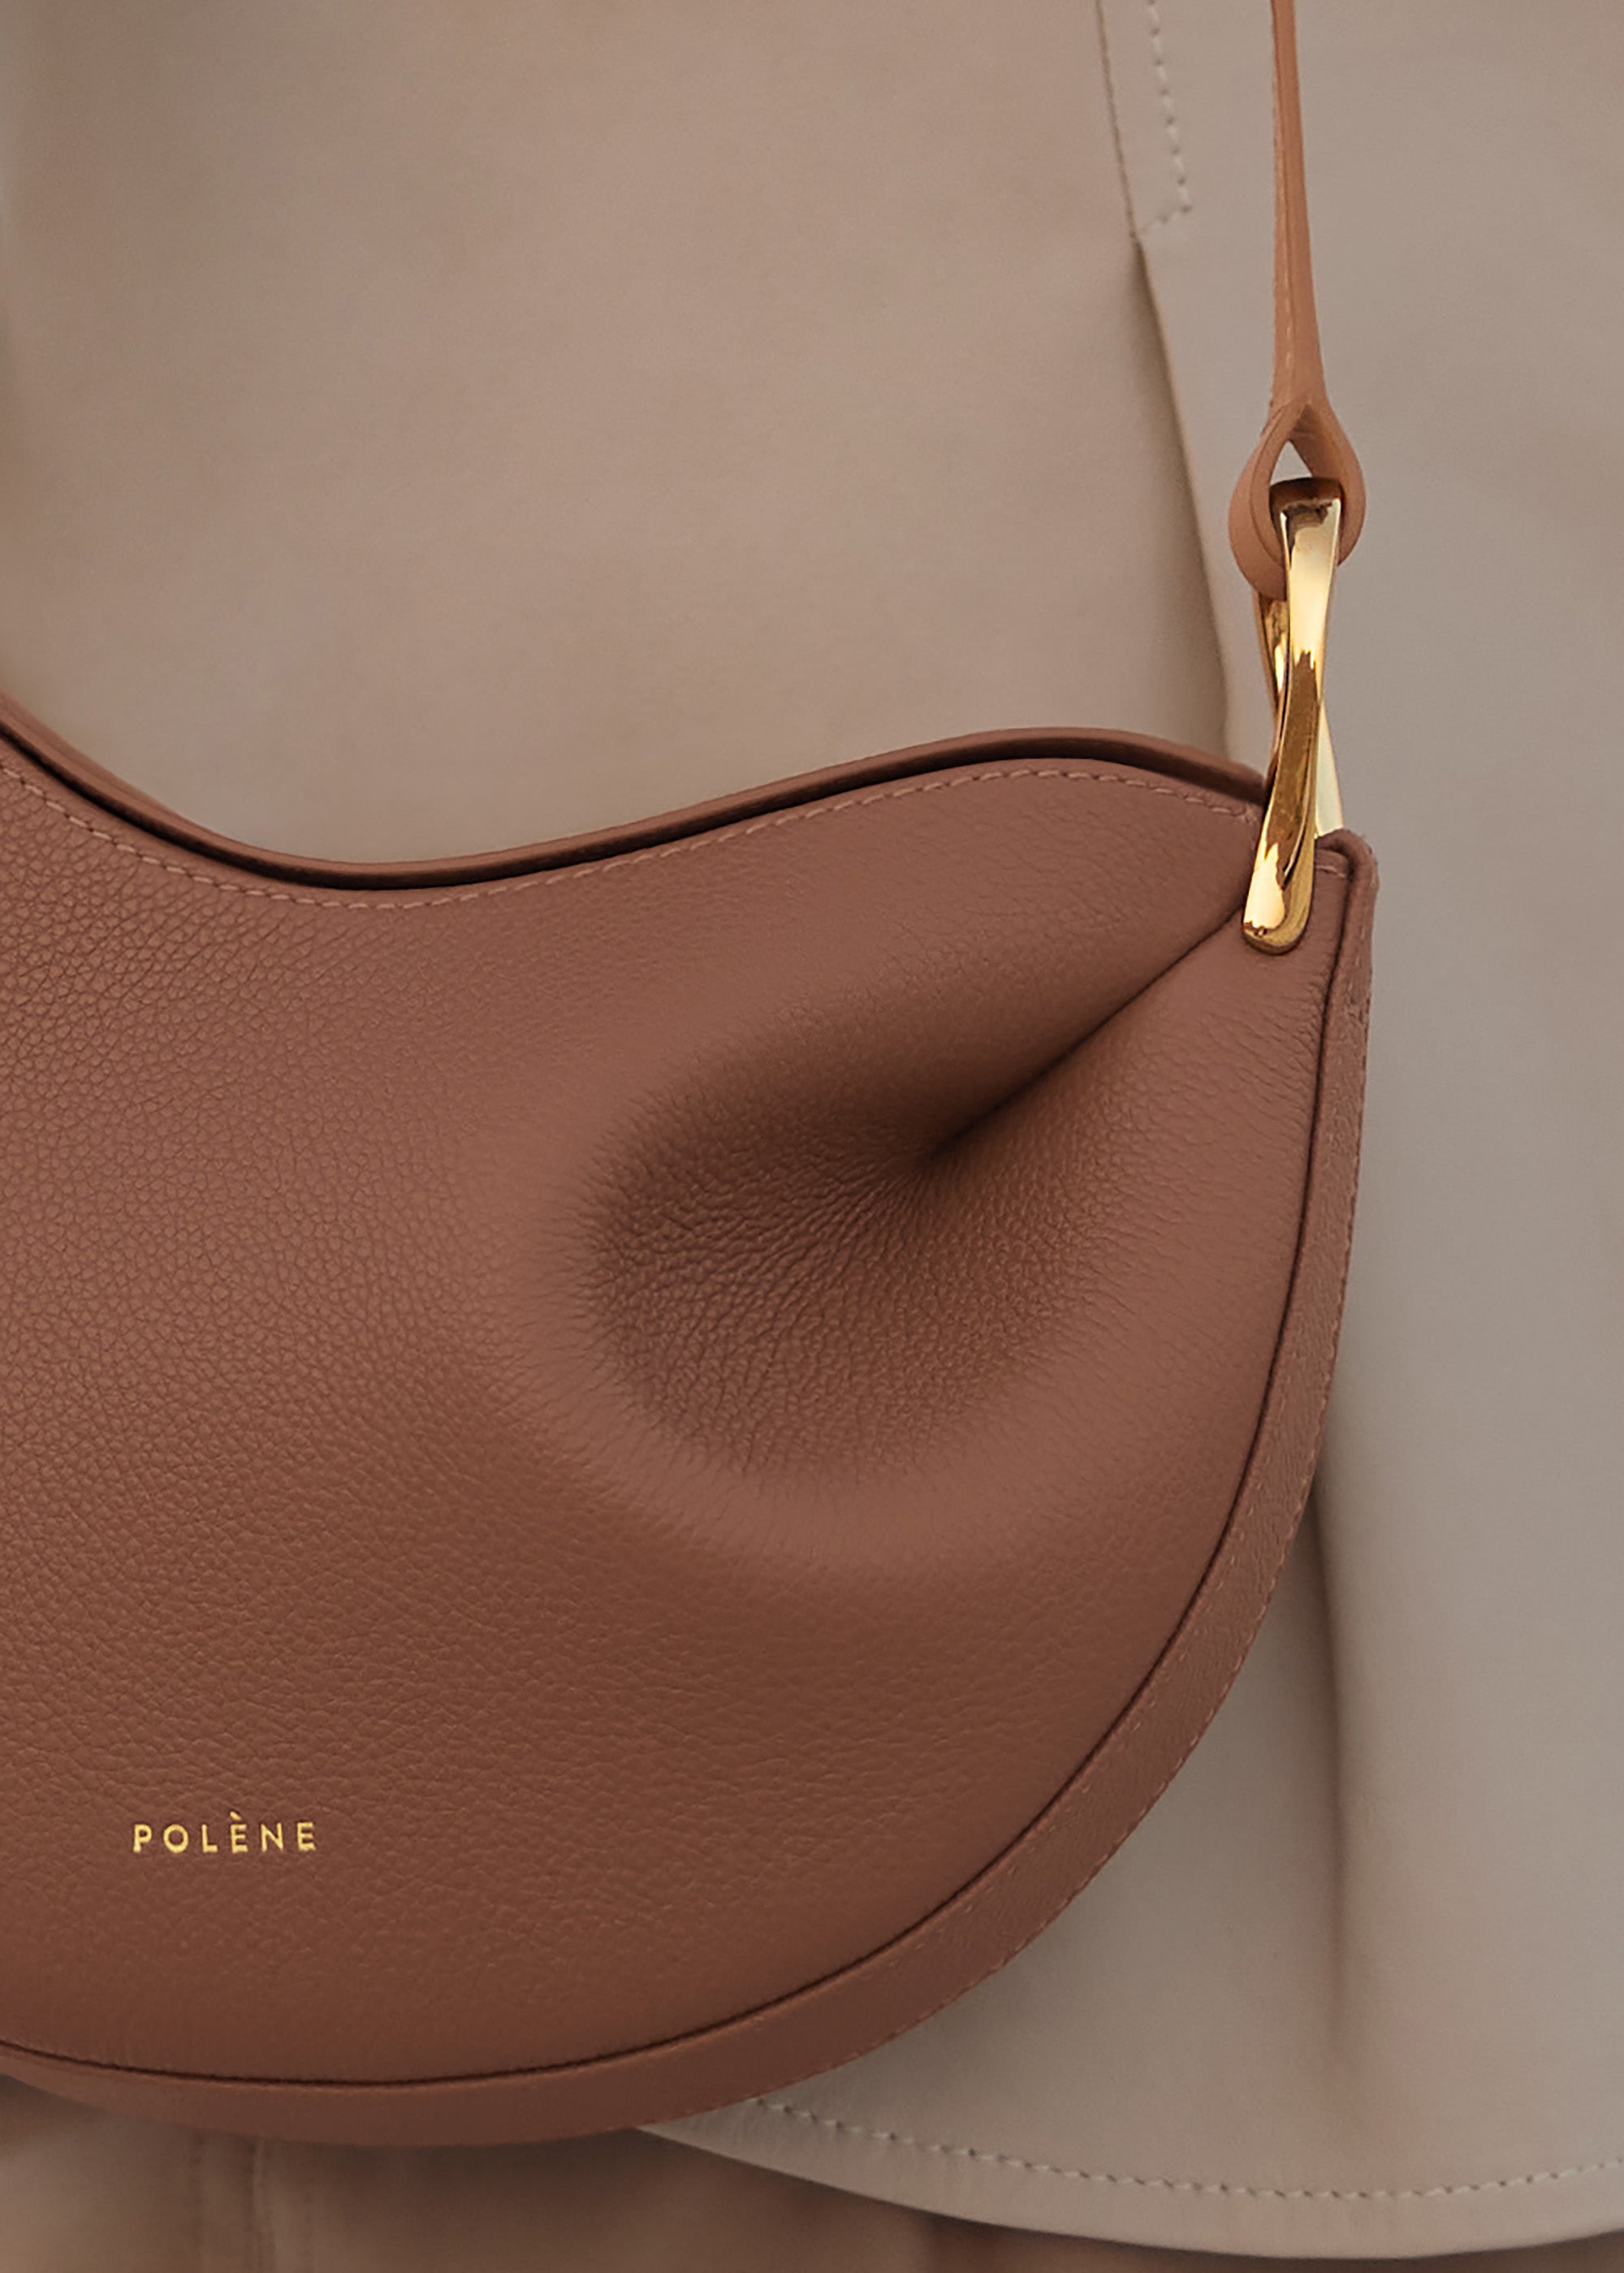 Polène  Bag - Béri - Camel Textured Leather